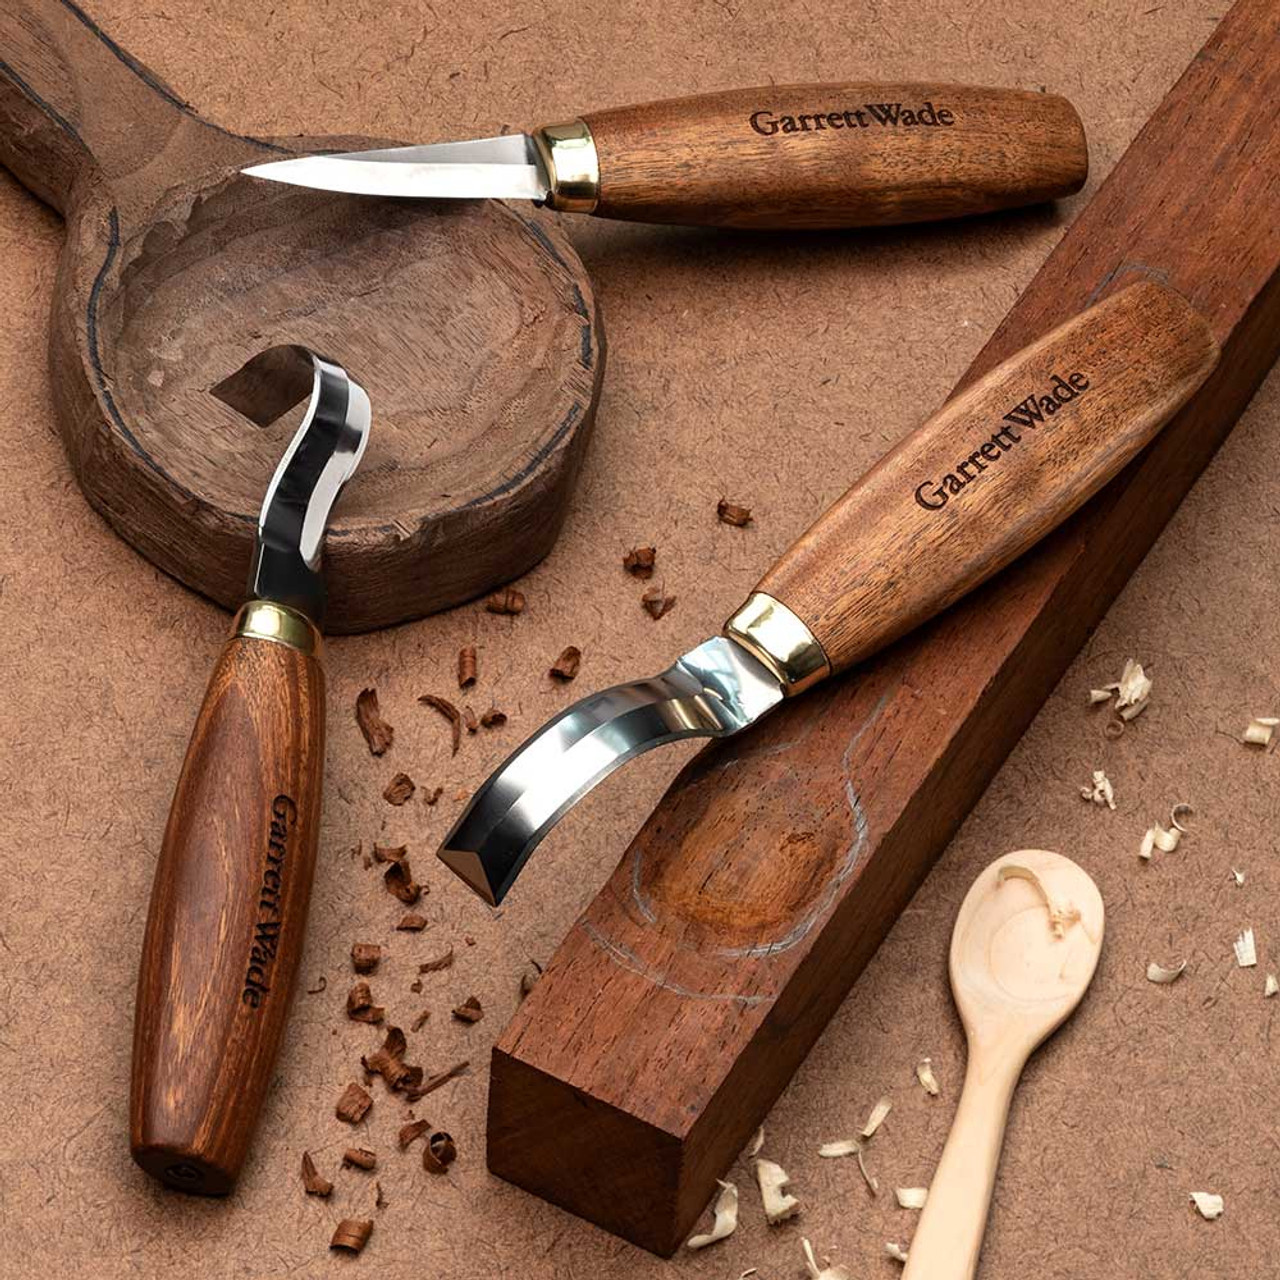 Wooden Spoon Carving Tool Set - Garrett Wade